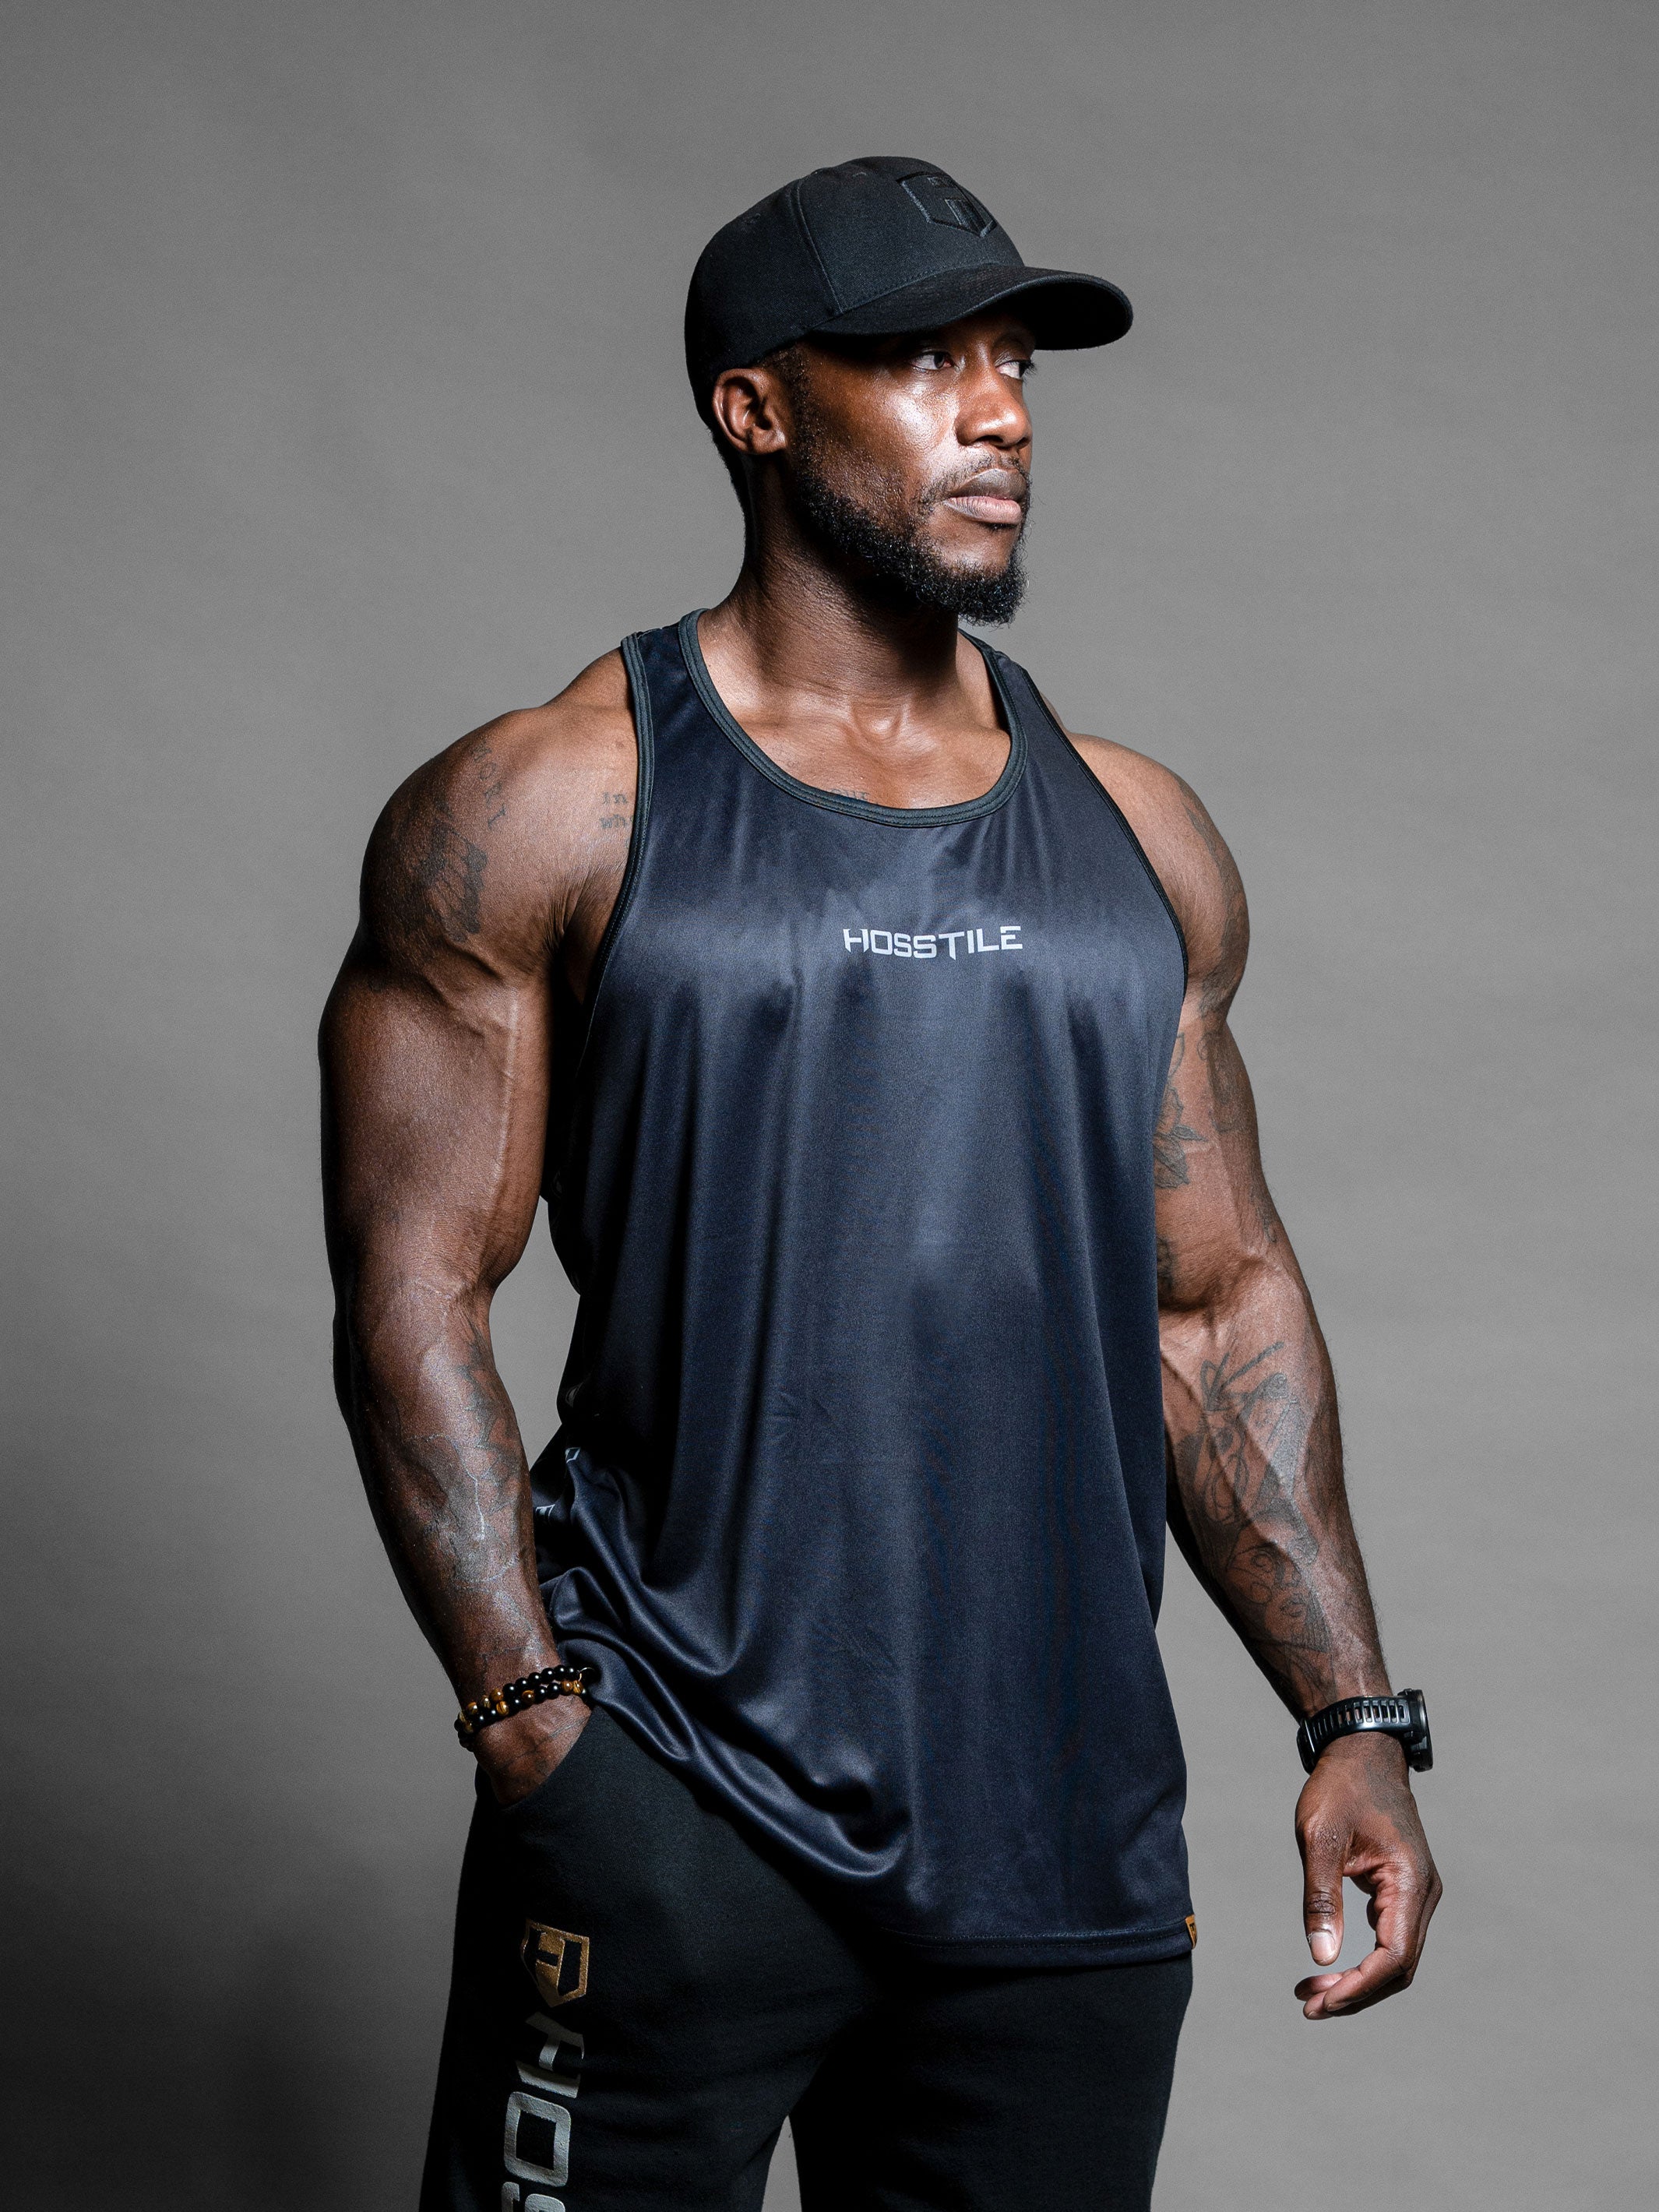 AE, Bodybuilding Tee - Black, Gym T-Shirts Men